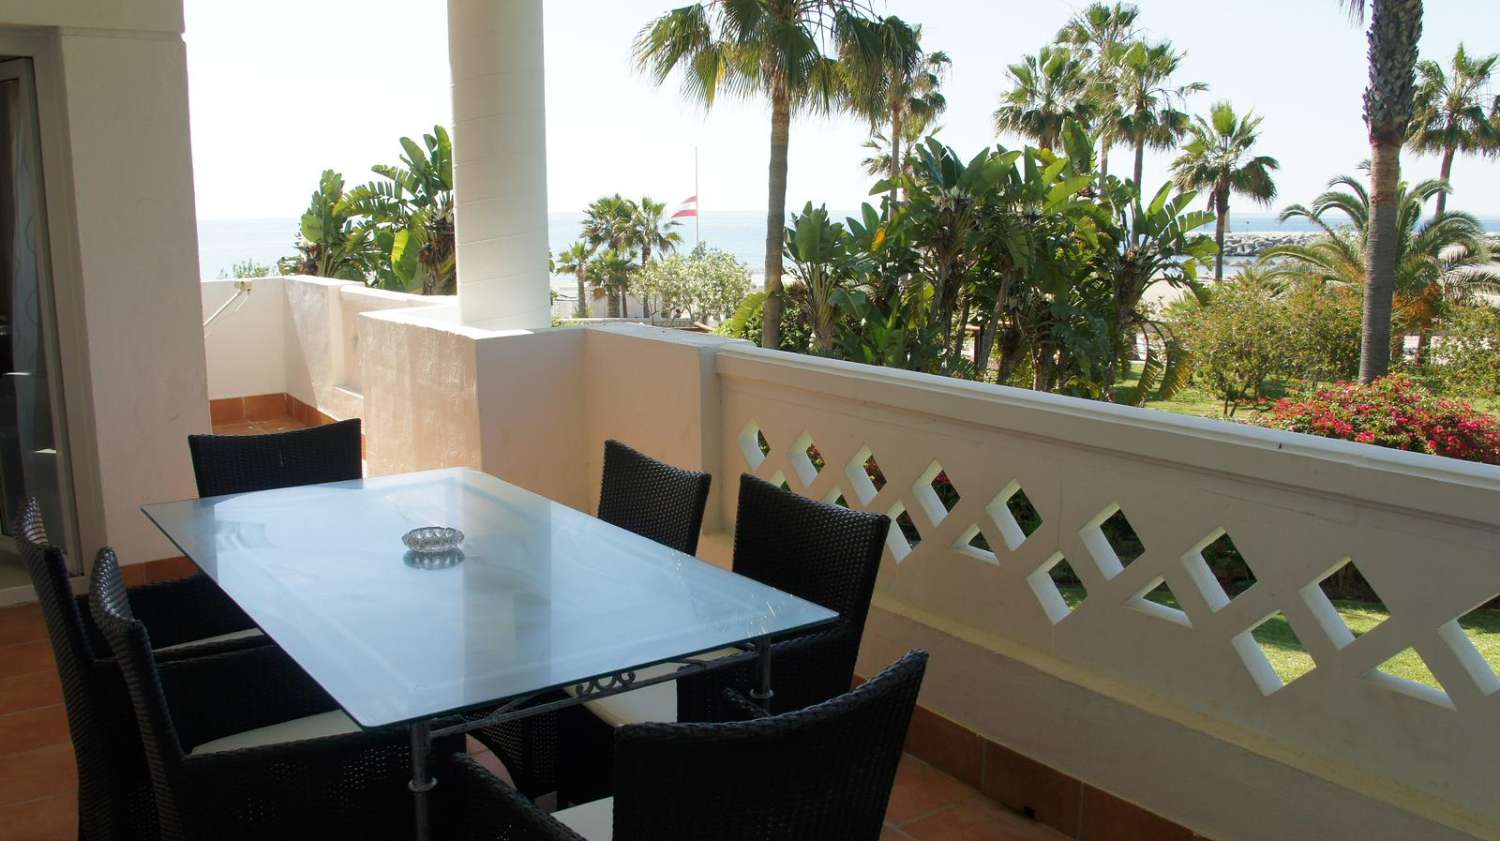 Location de vacances. Appartement avec vue sur la mer. Puerto Banus, Marbella.